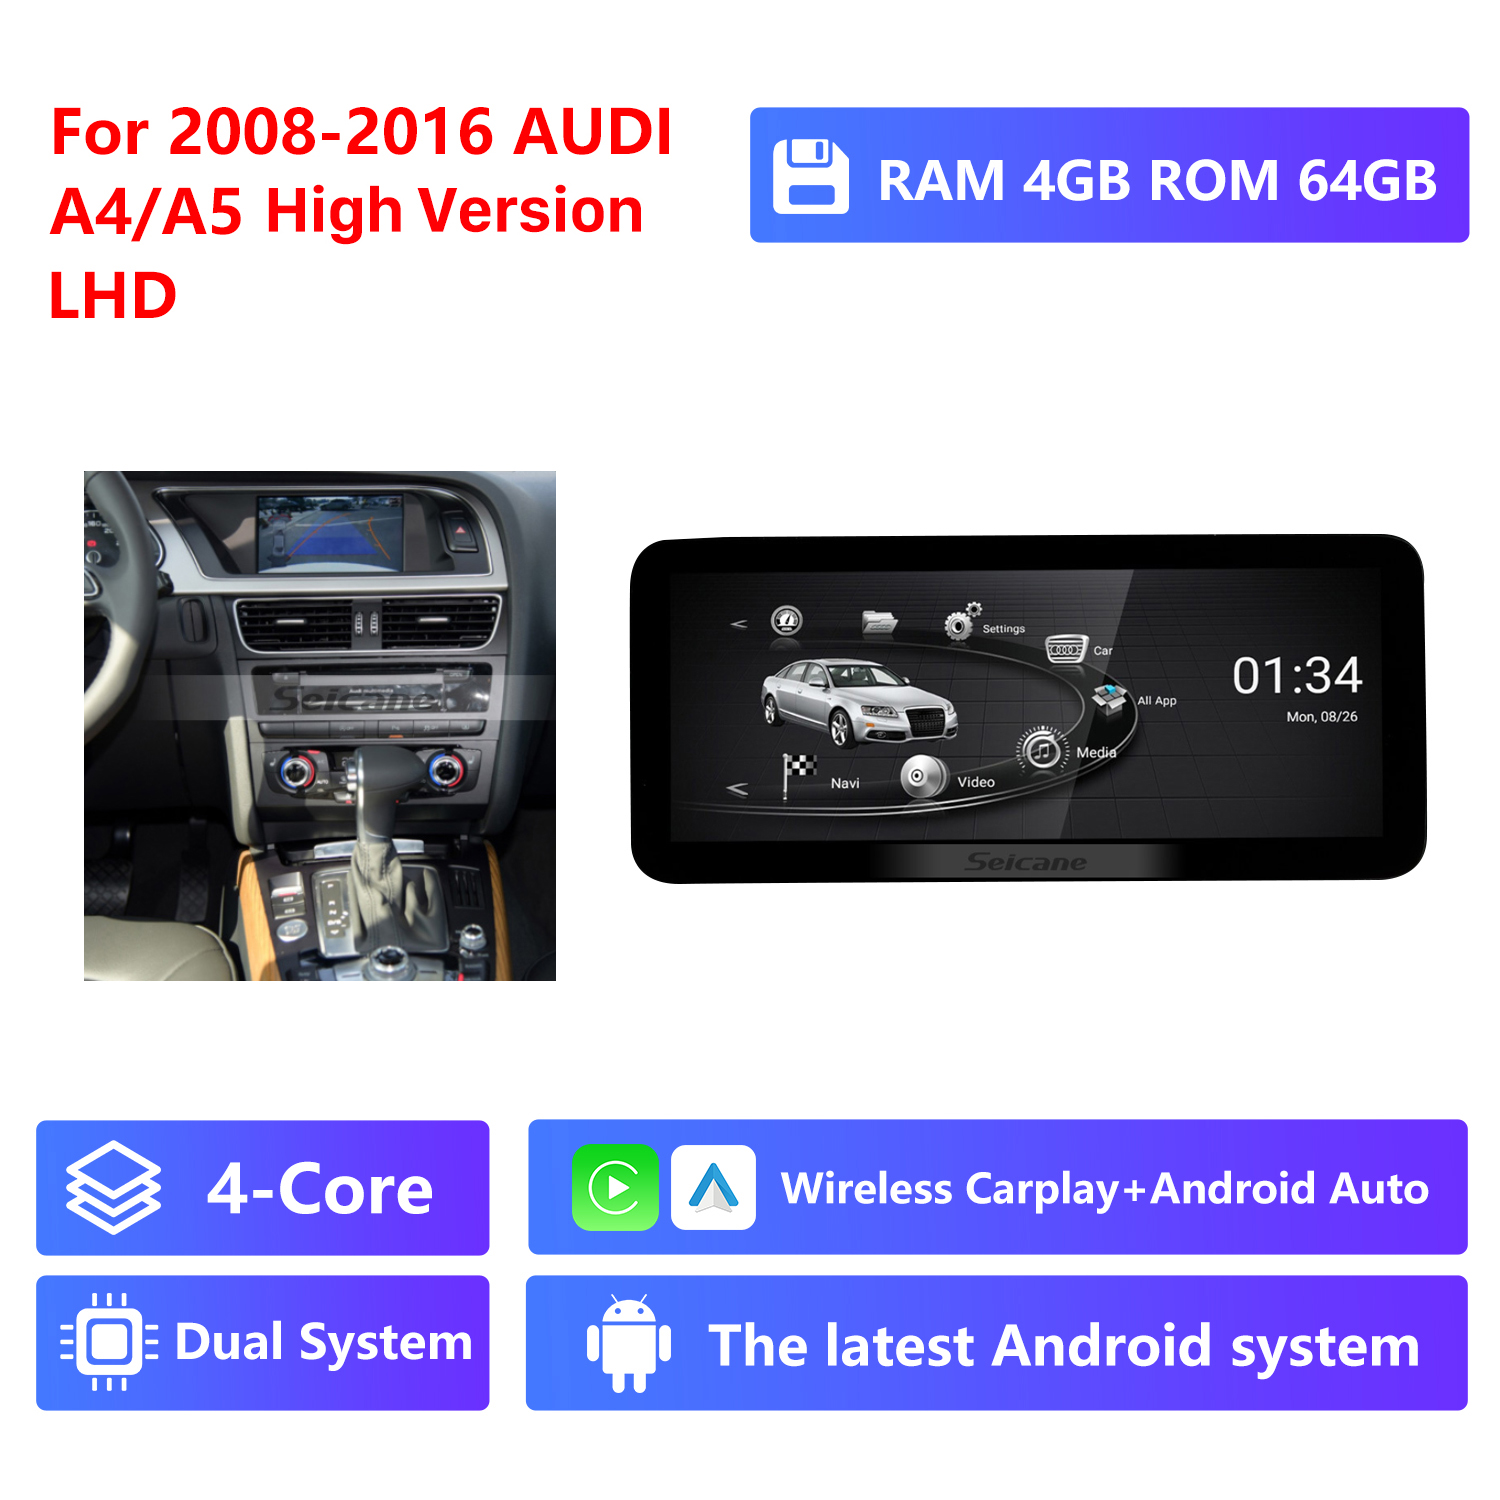 4-Core RAM 4G ROM 64G,2008-2016,High version,LHD